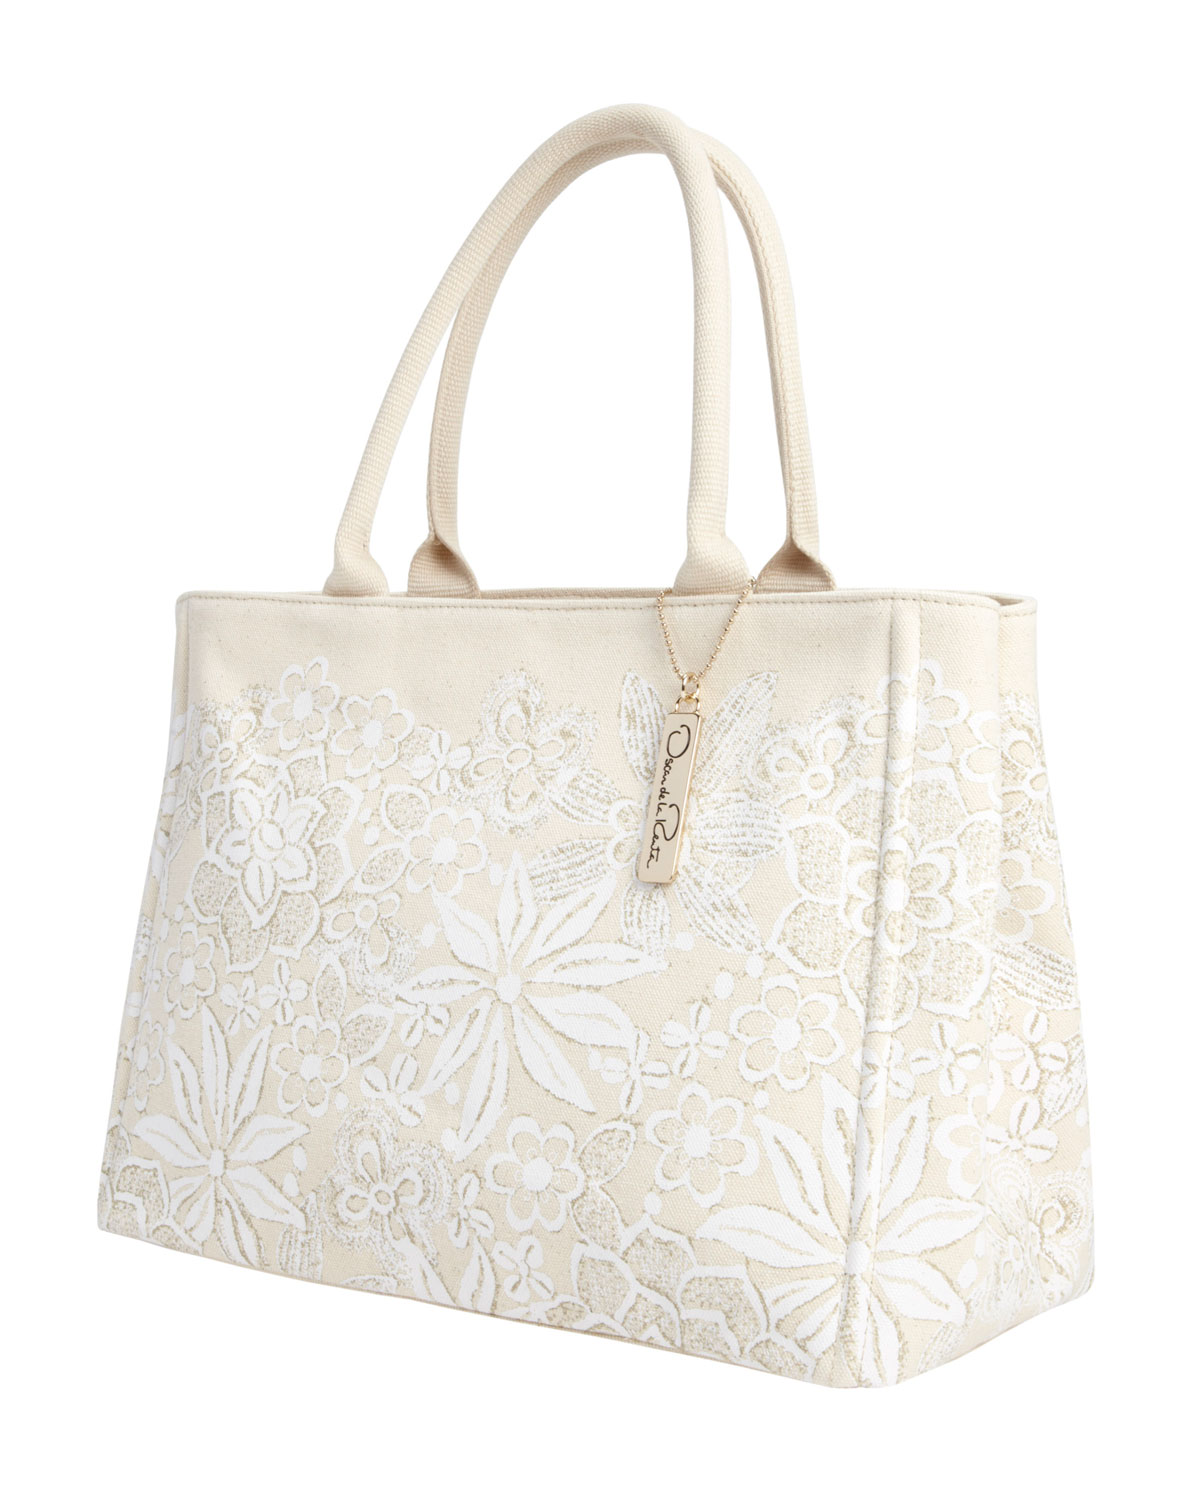 Oscar de la renta Nm Target Floral Canvas Tote Bag in White | Lyst